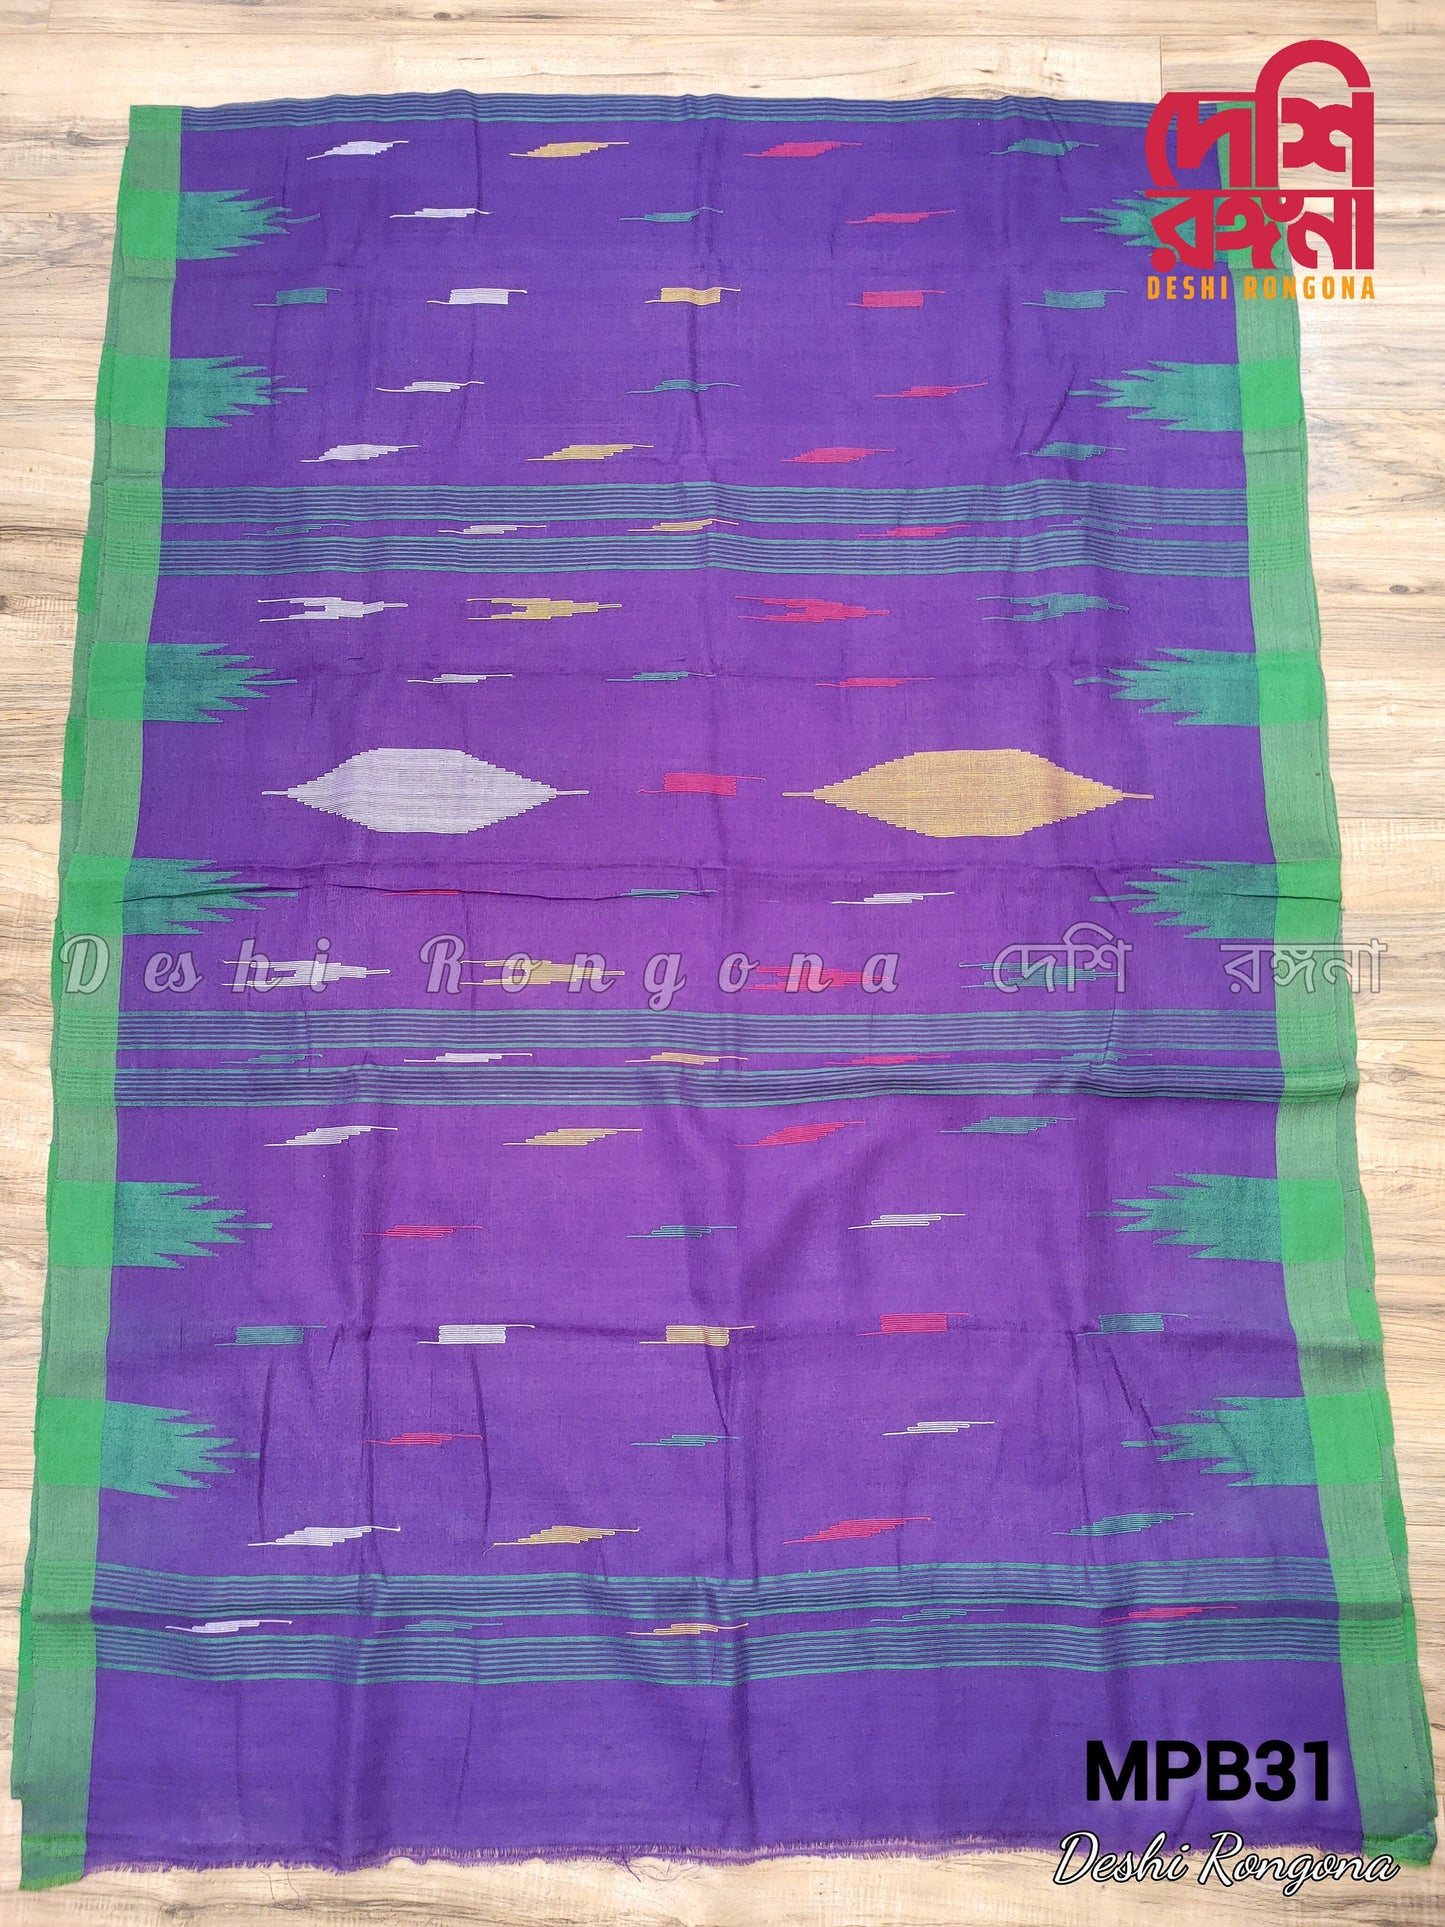 Sylheti Original Monipuri Handwoven Soft Cotton Saree, Purple with Green Hand Woven Border,Bangladeshi,Traditional Saree